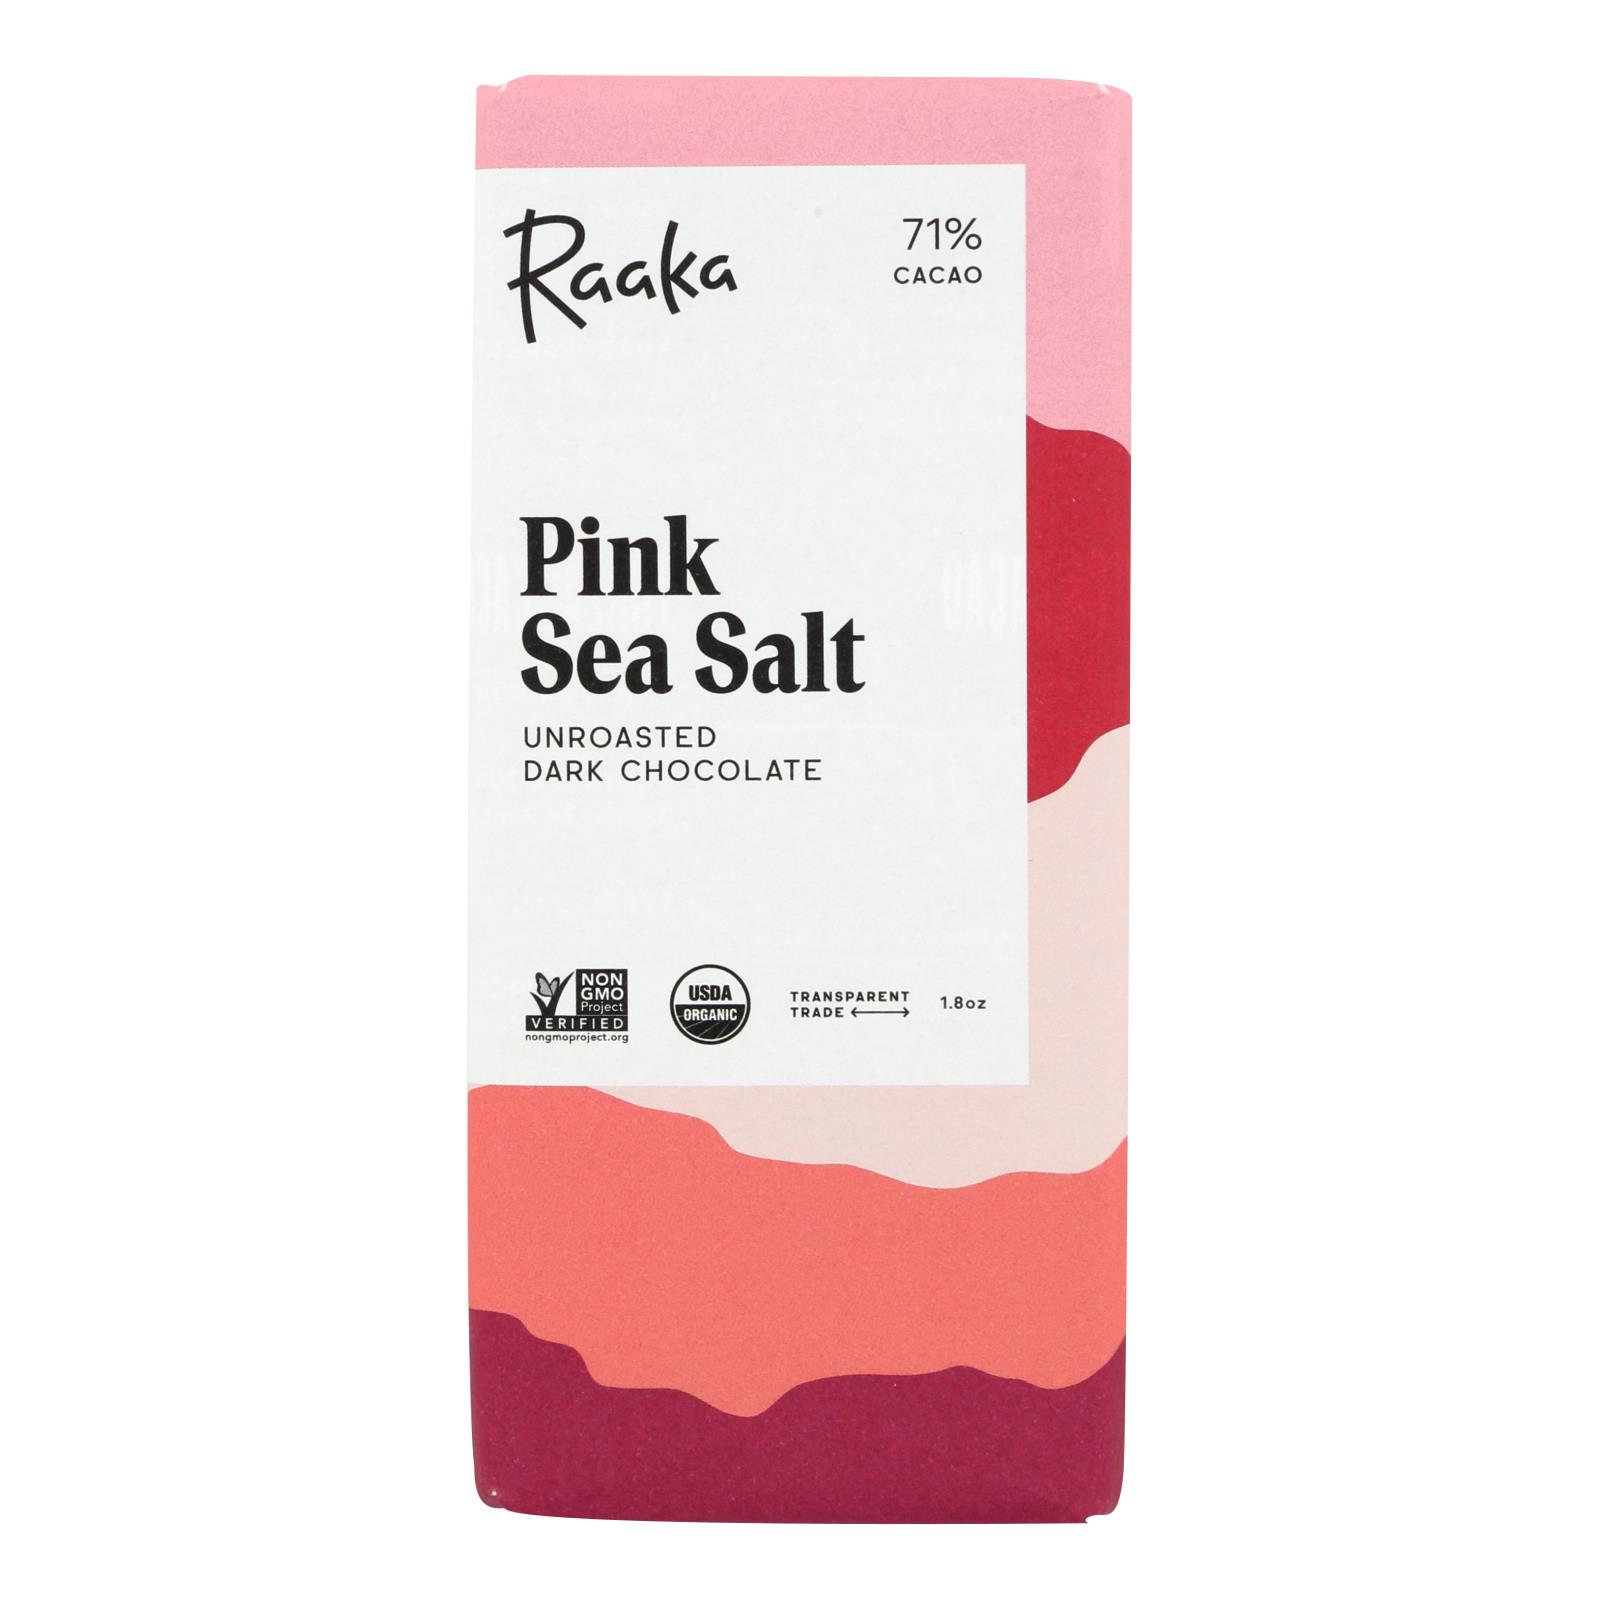 Raaka's Pink Sea Salt Chocolate Bar - 12개 묶음상품 - 1.8 OZ